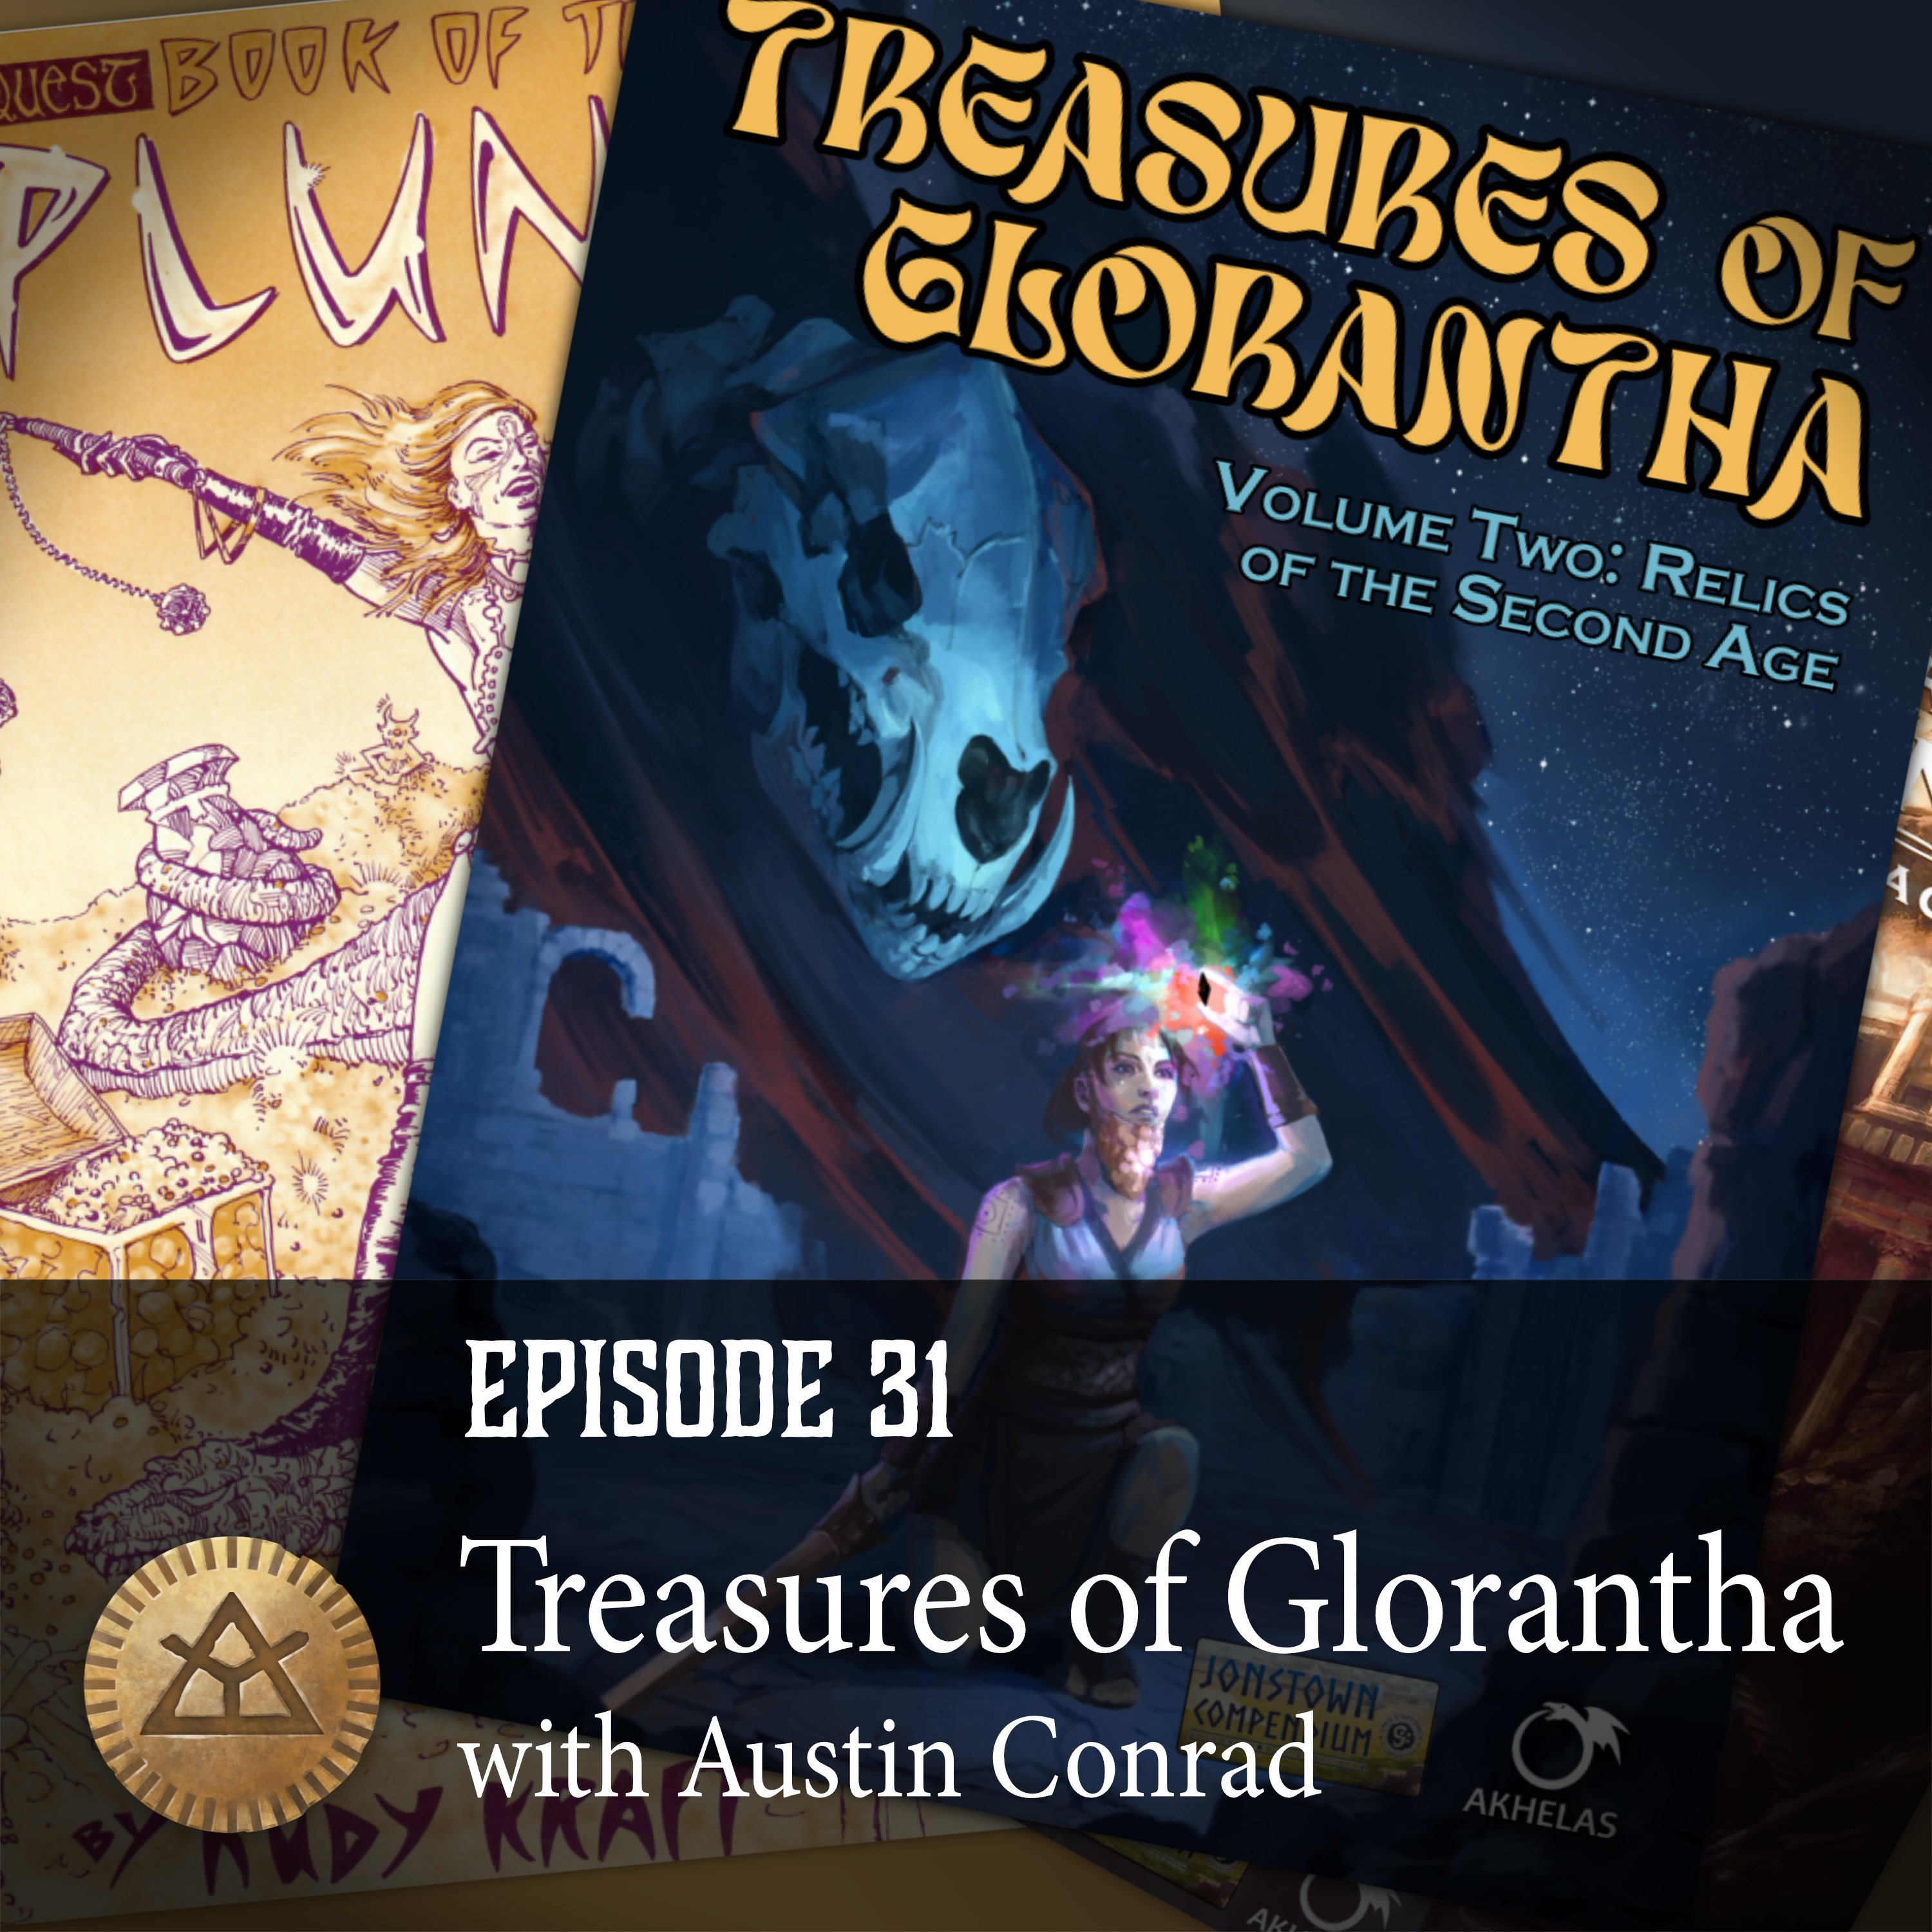 Episode 31: Treasures of Glorantha